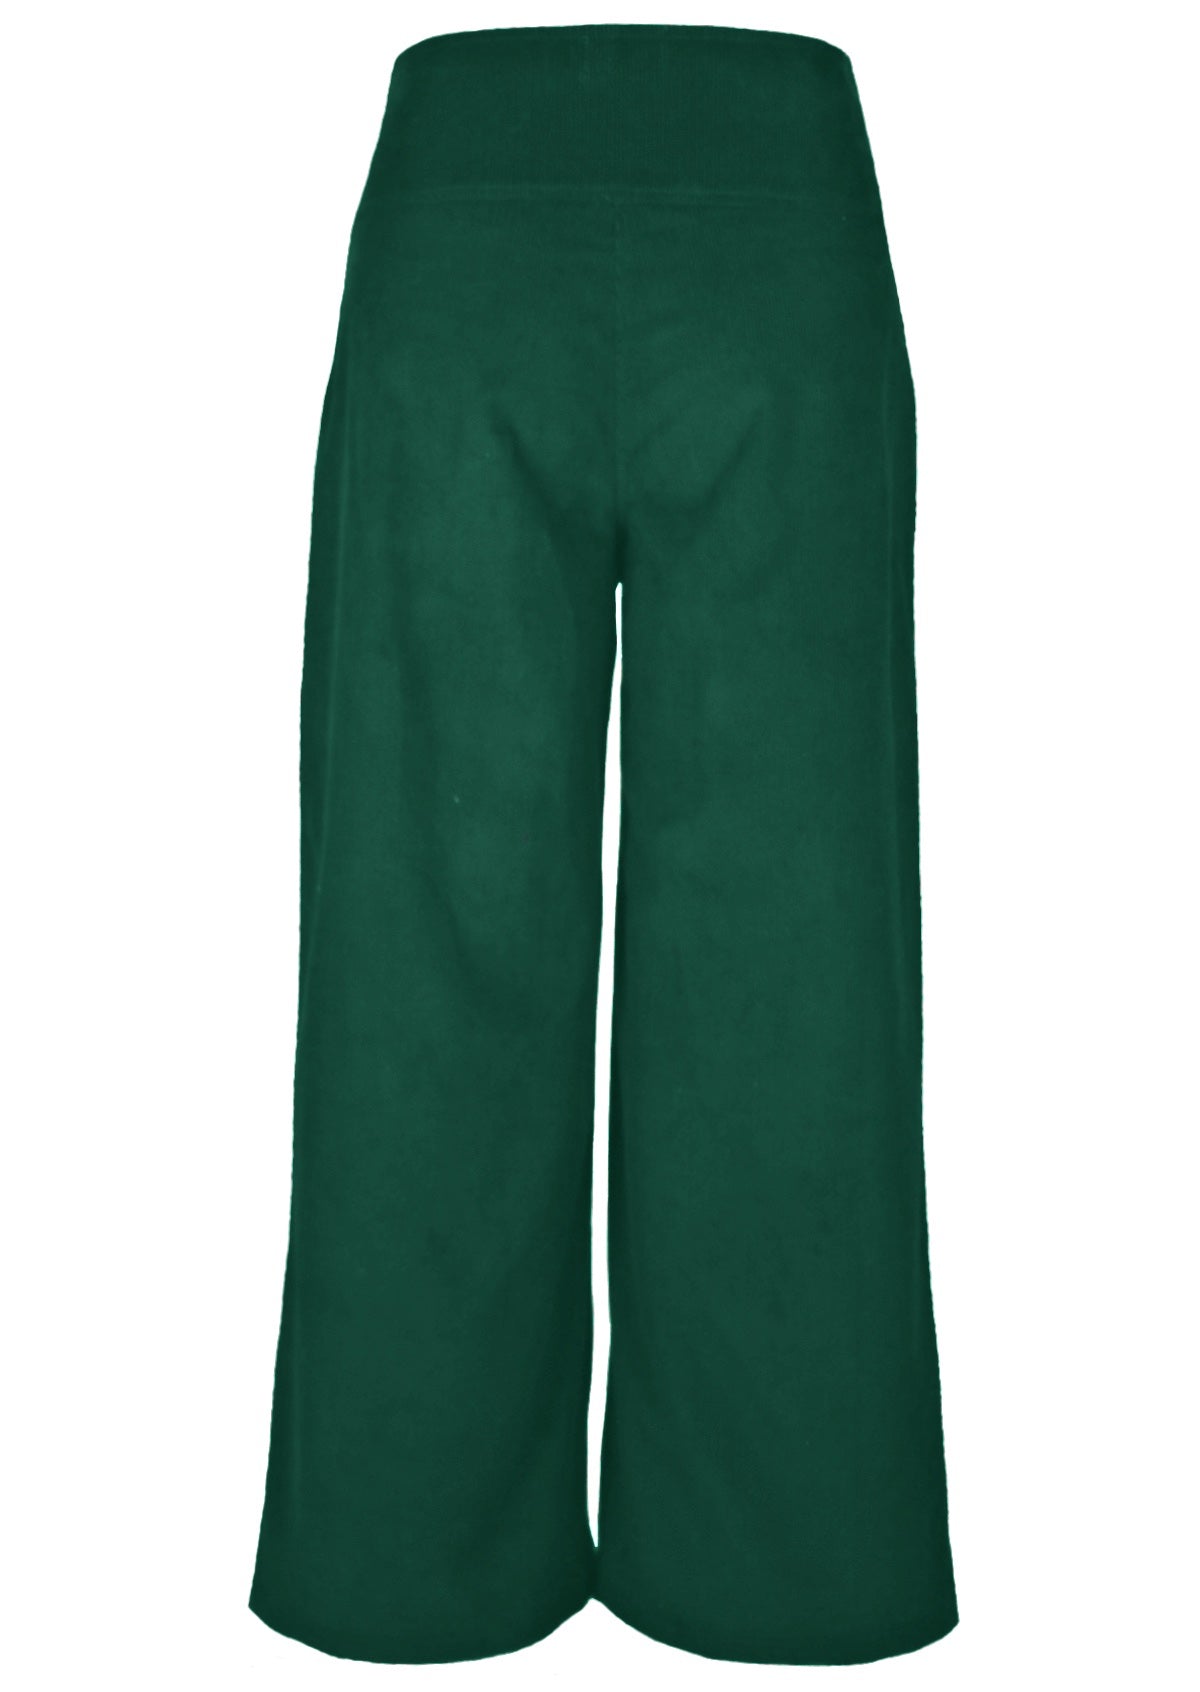 Fashionable 100% cotton corduroy pants in green. 